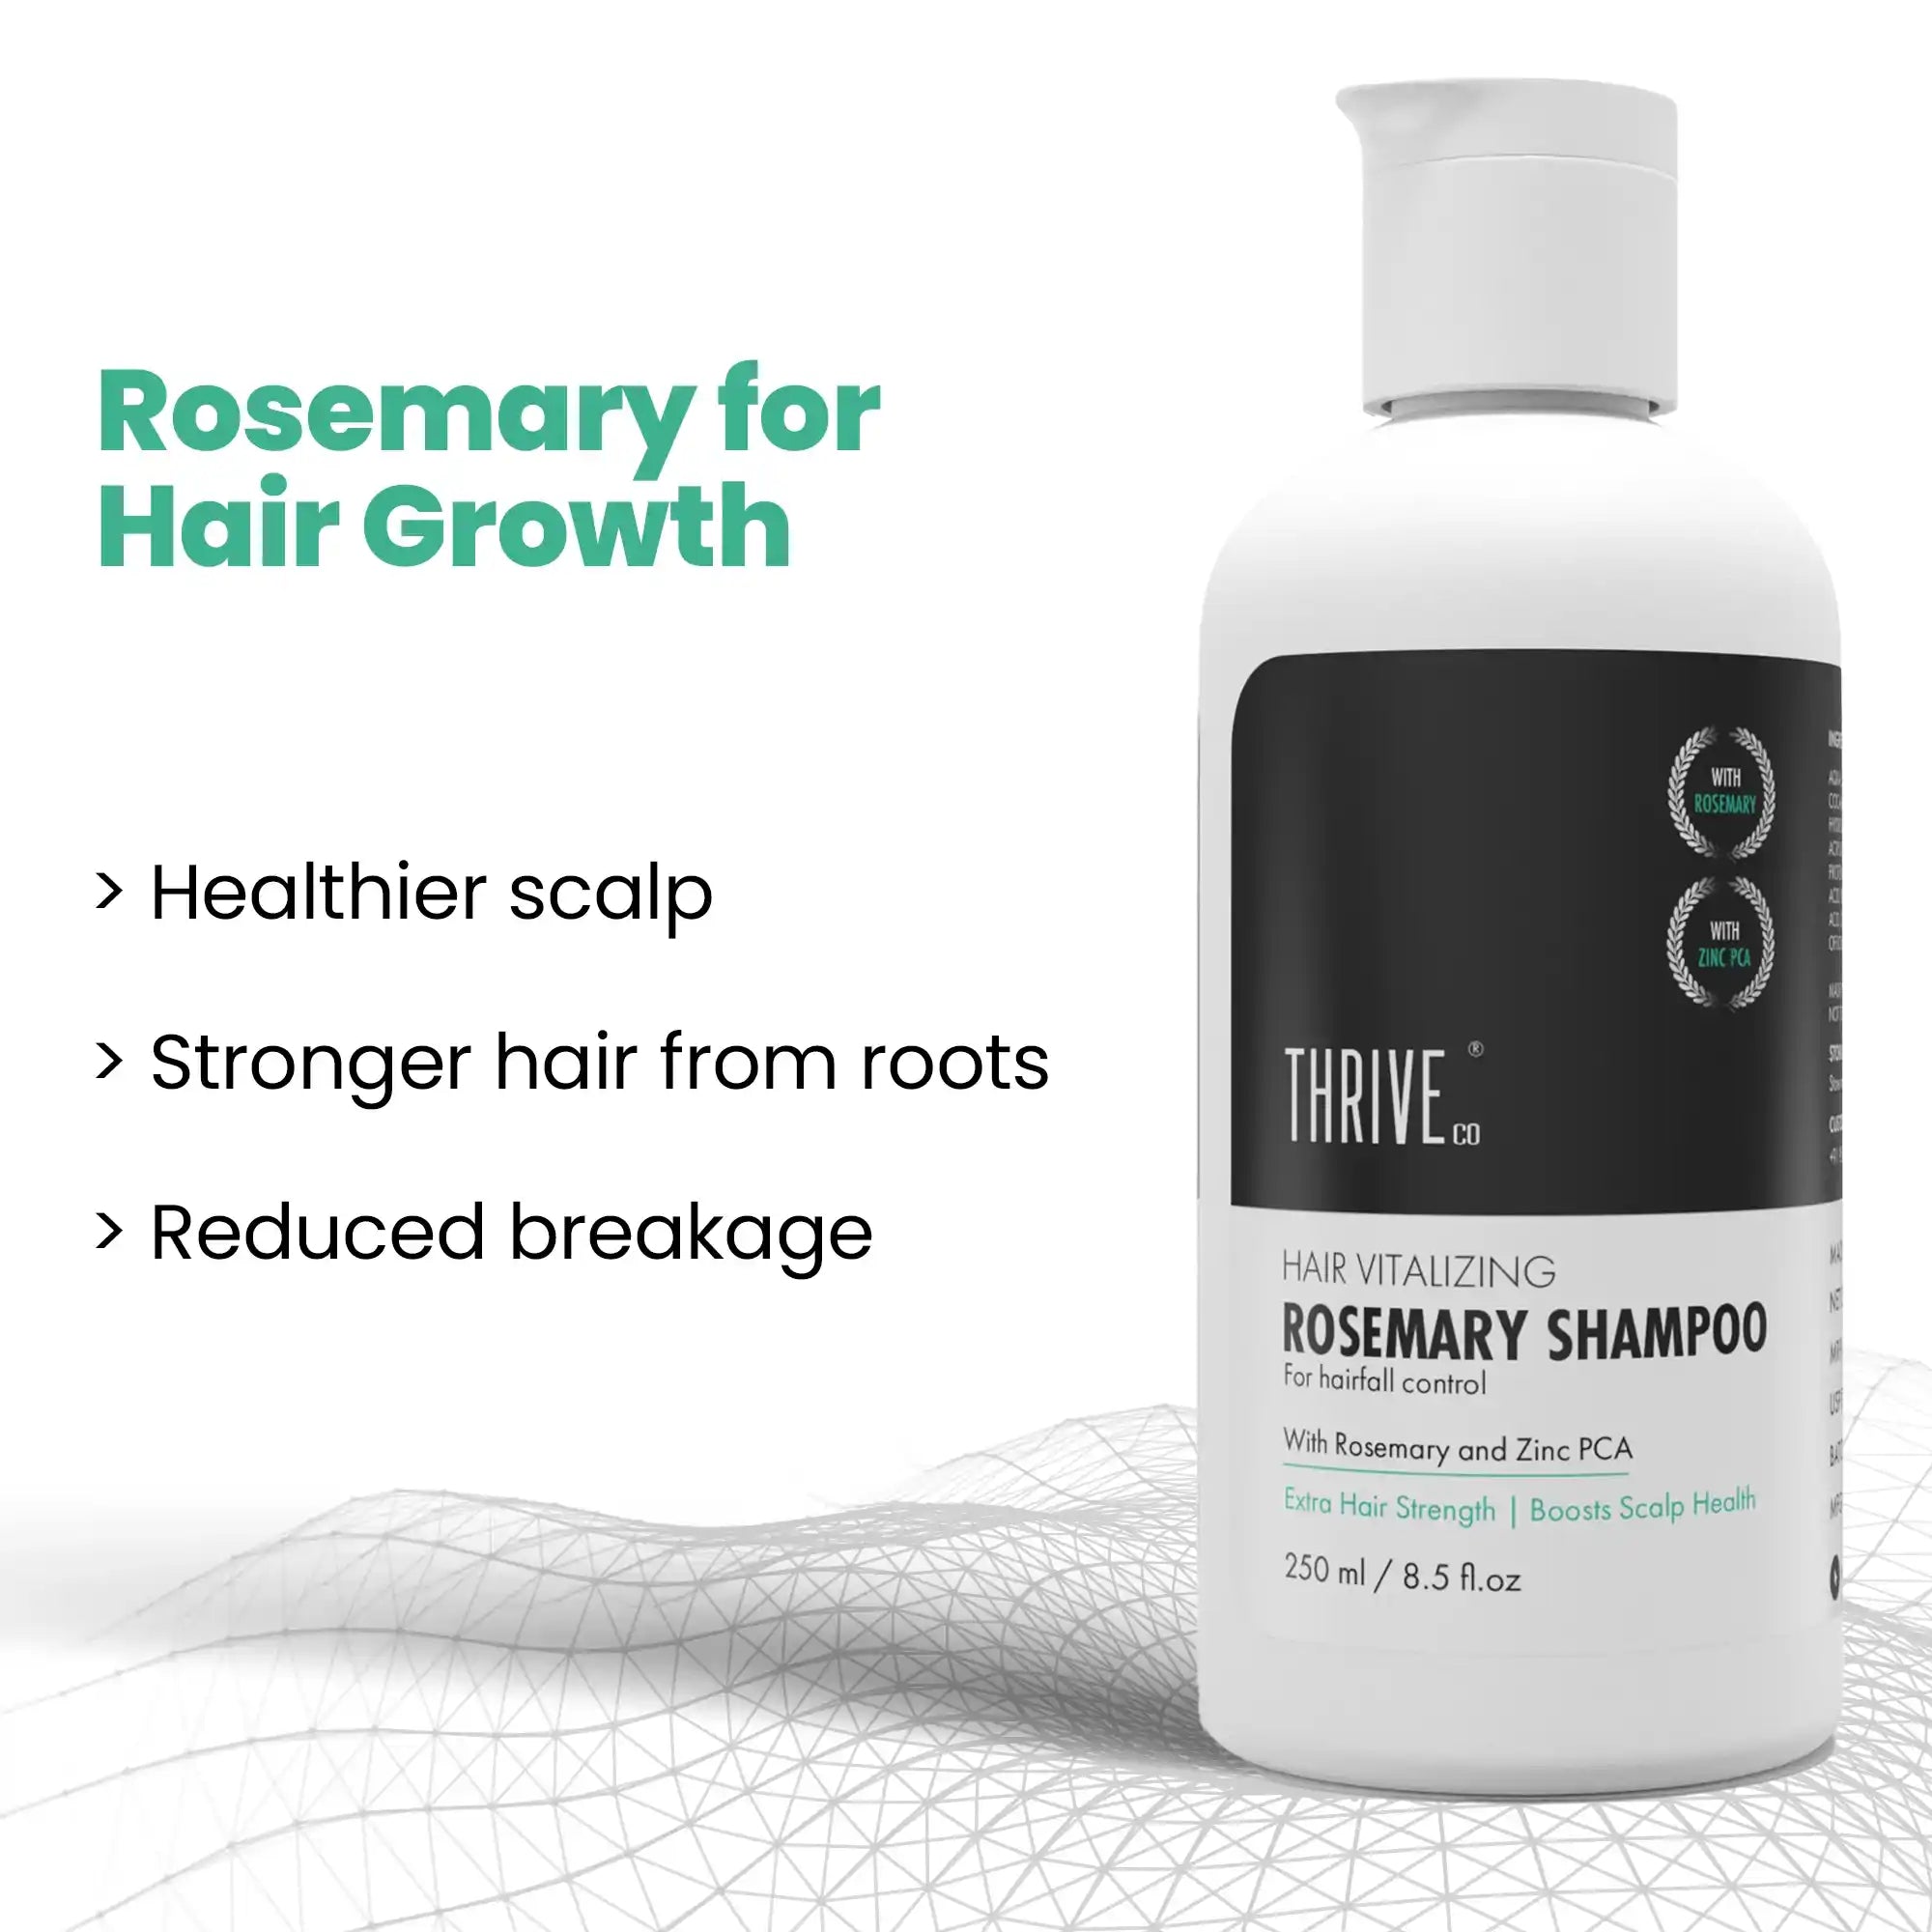 thriveco hair vitalizing rosemary shampoo for hair fall control and hair growth